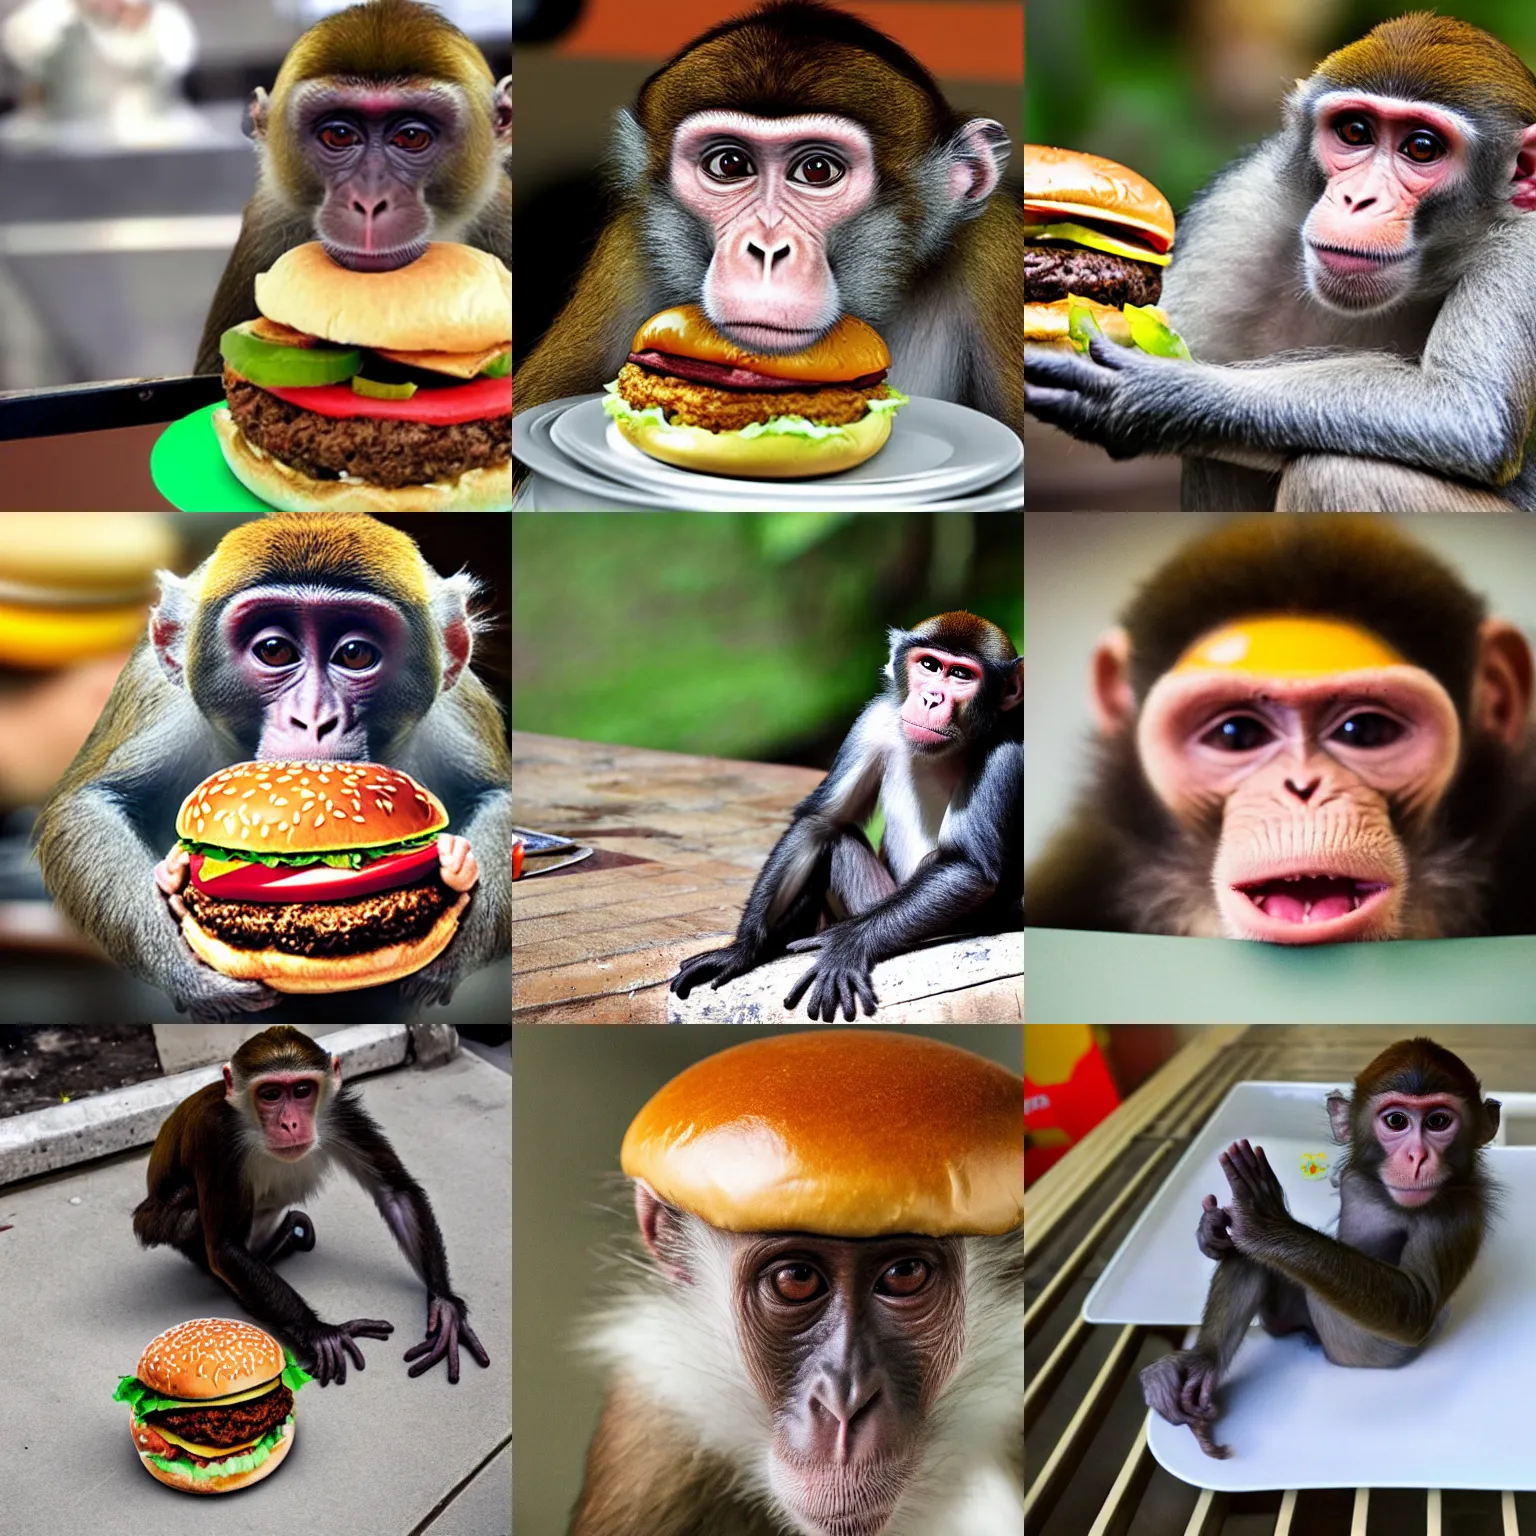 Prompt: a monkey inside a hamburger